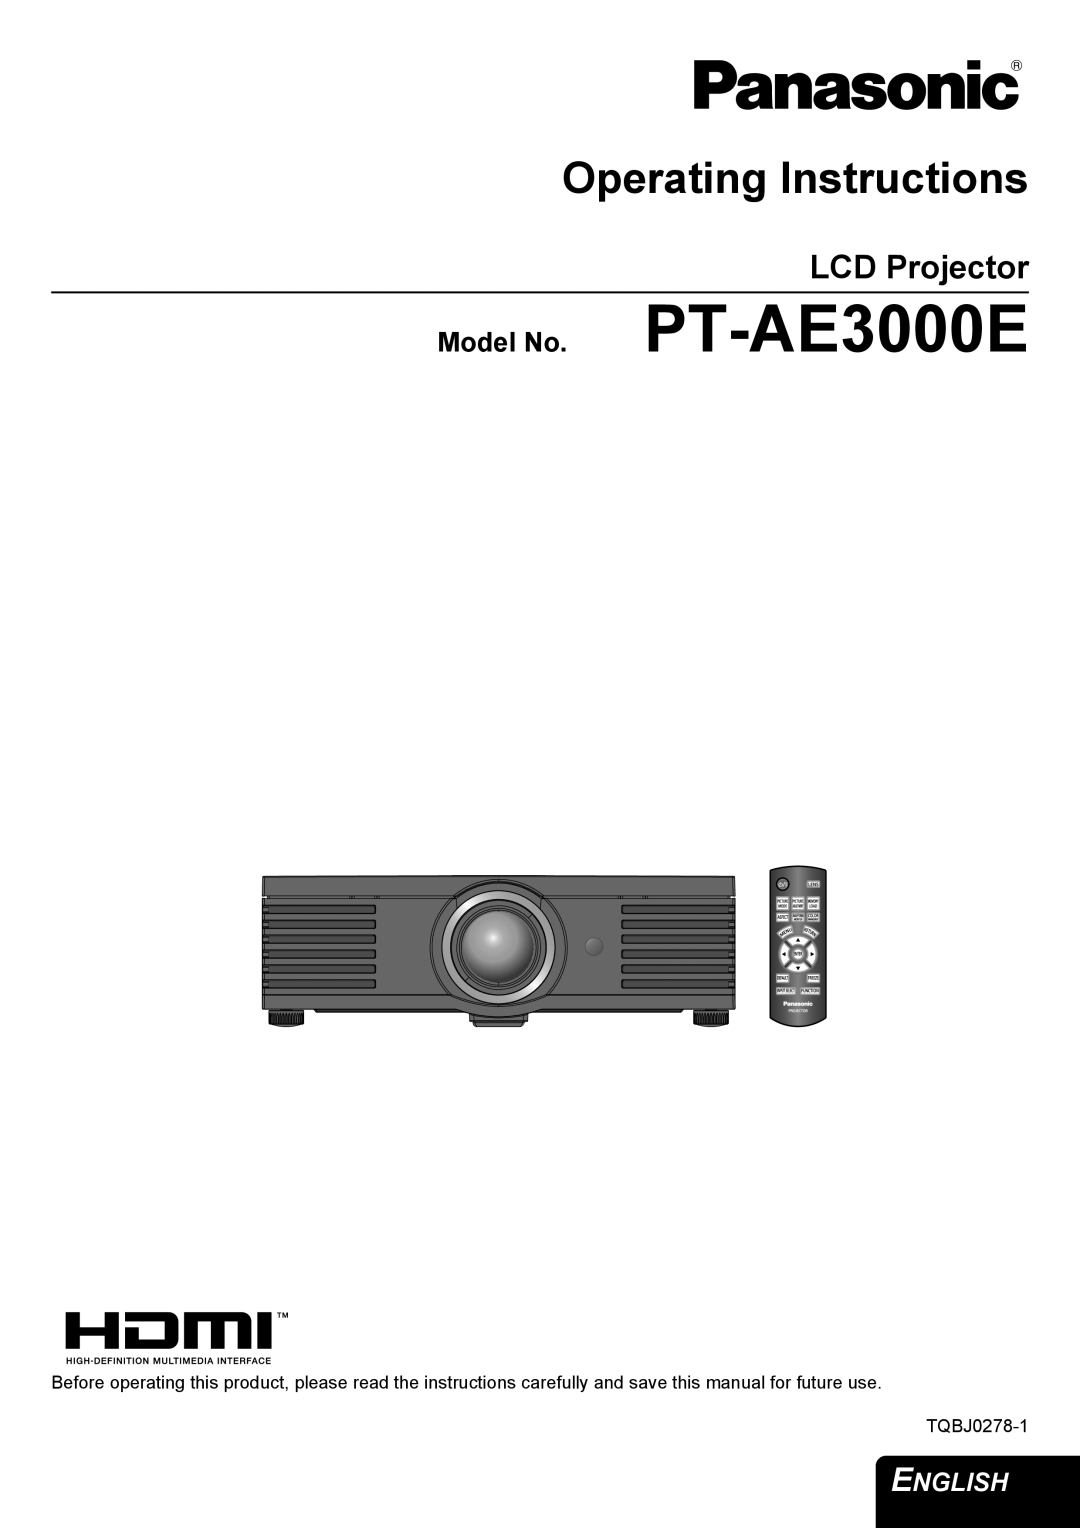 Panasonic manual LCD Projector, Operating Instructions, Model No. PT-AE3000E, English 